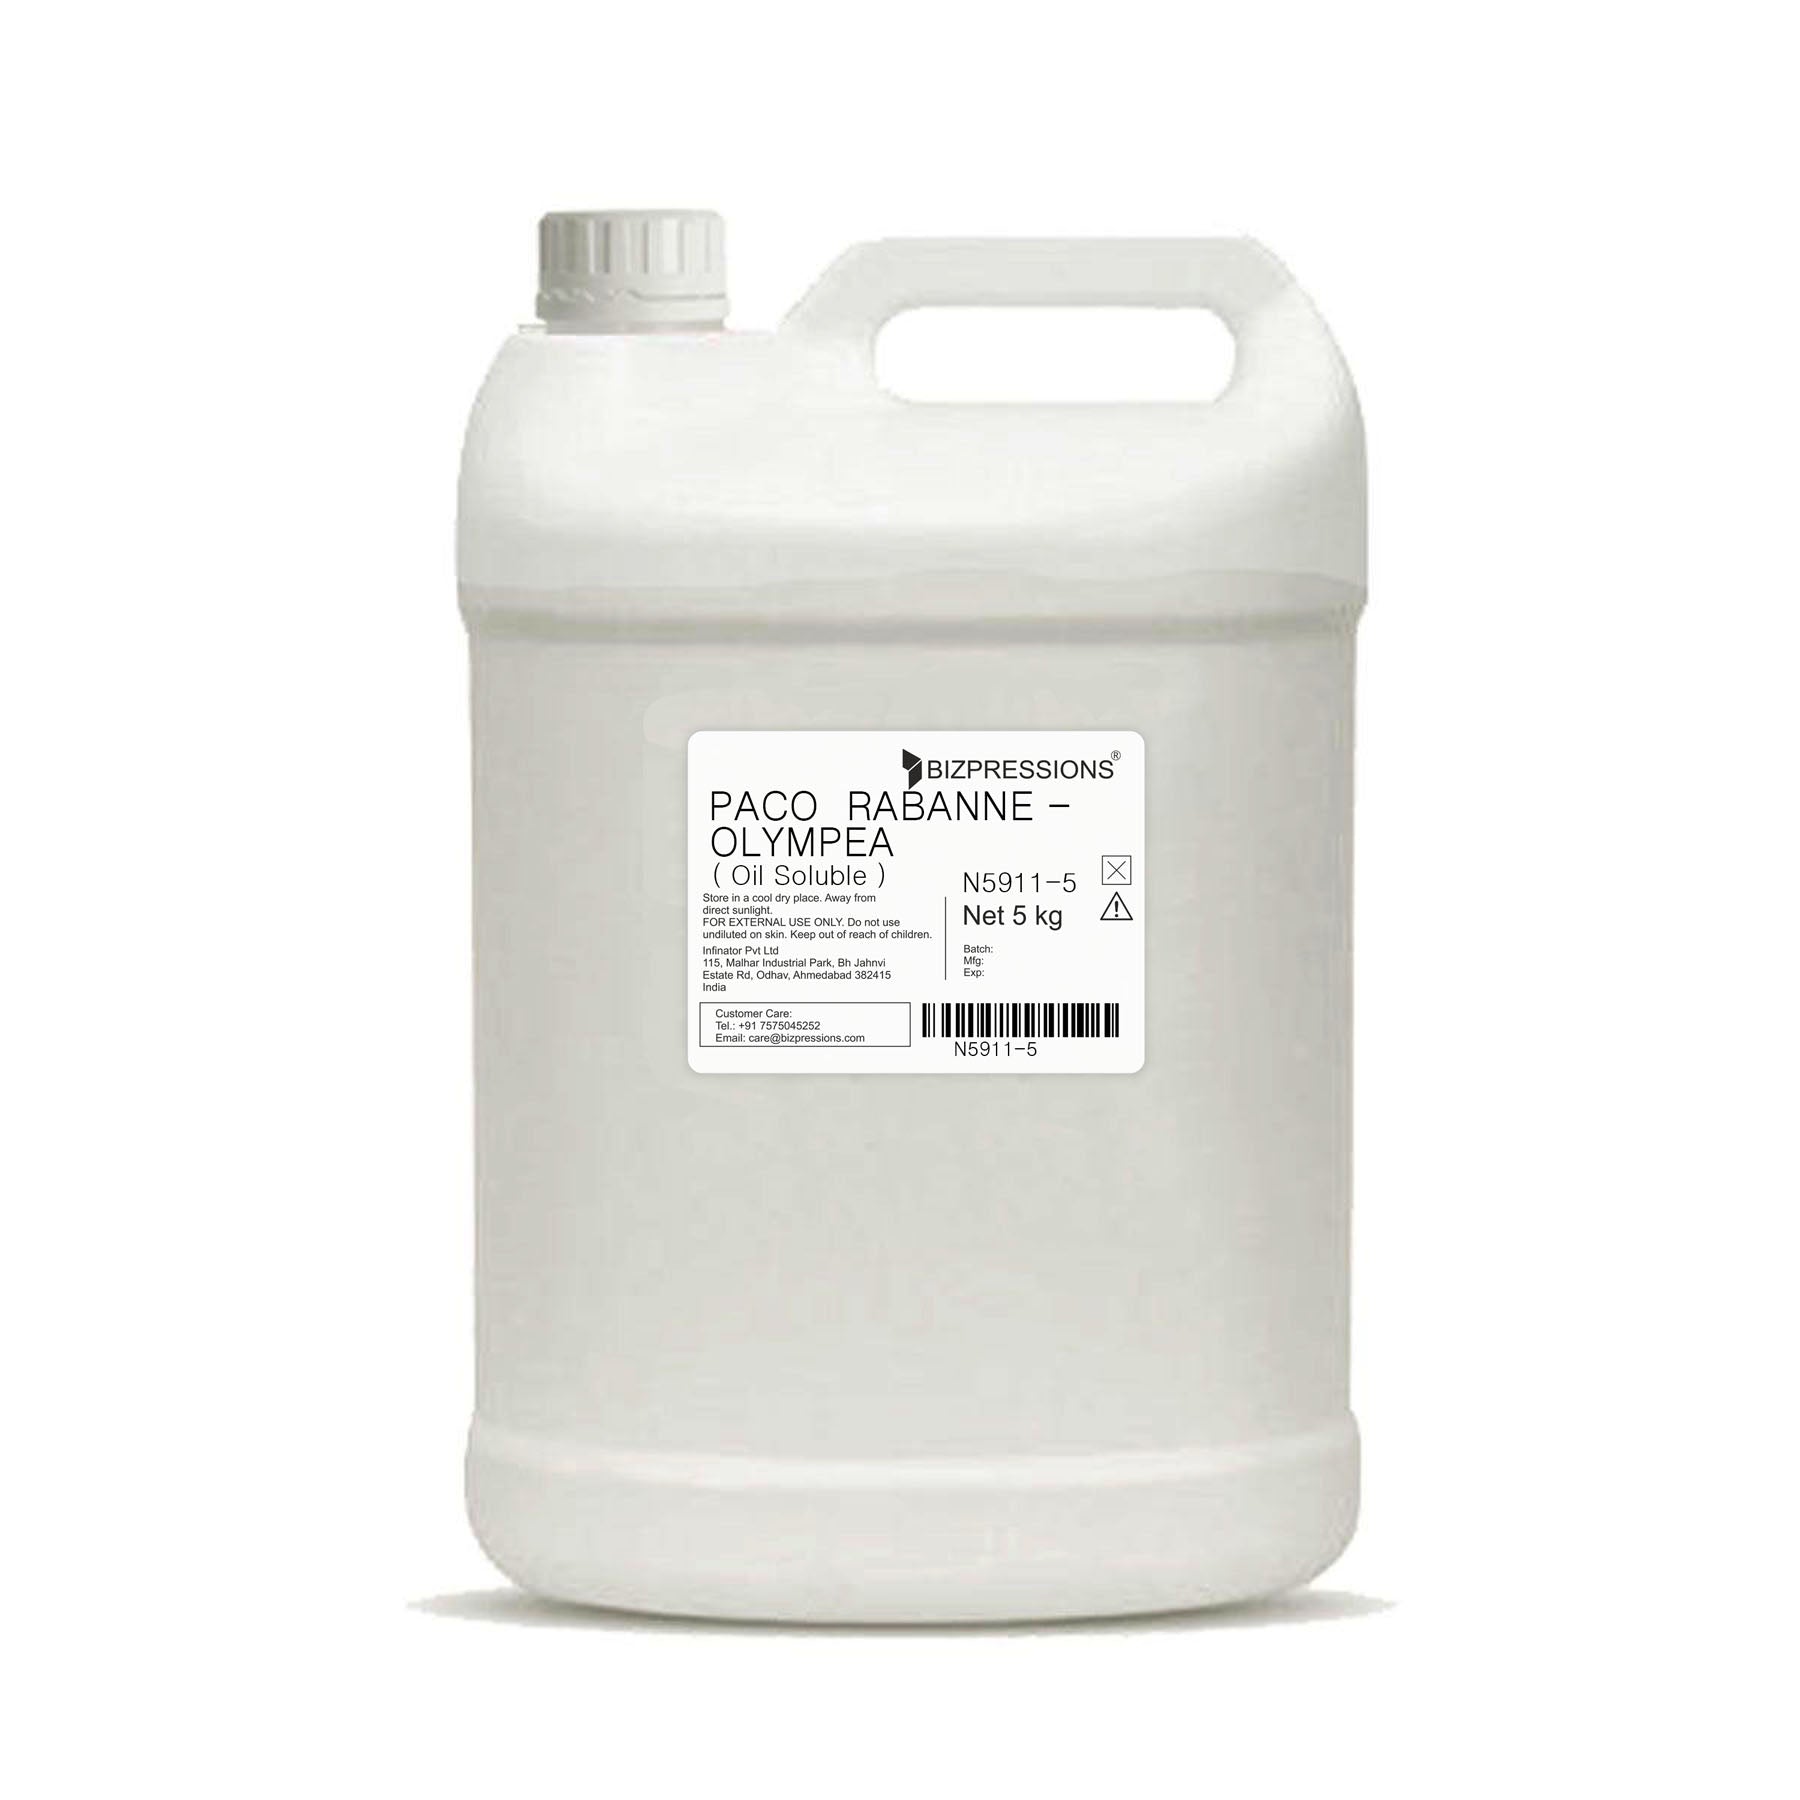 PACO RABANNE - OLYMPEA - Fragrance ( Oil Soluble ) - 5 kg